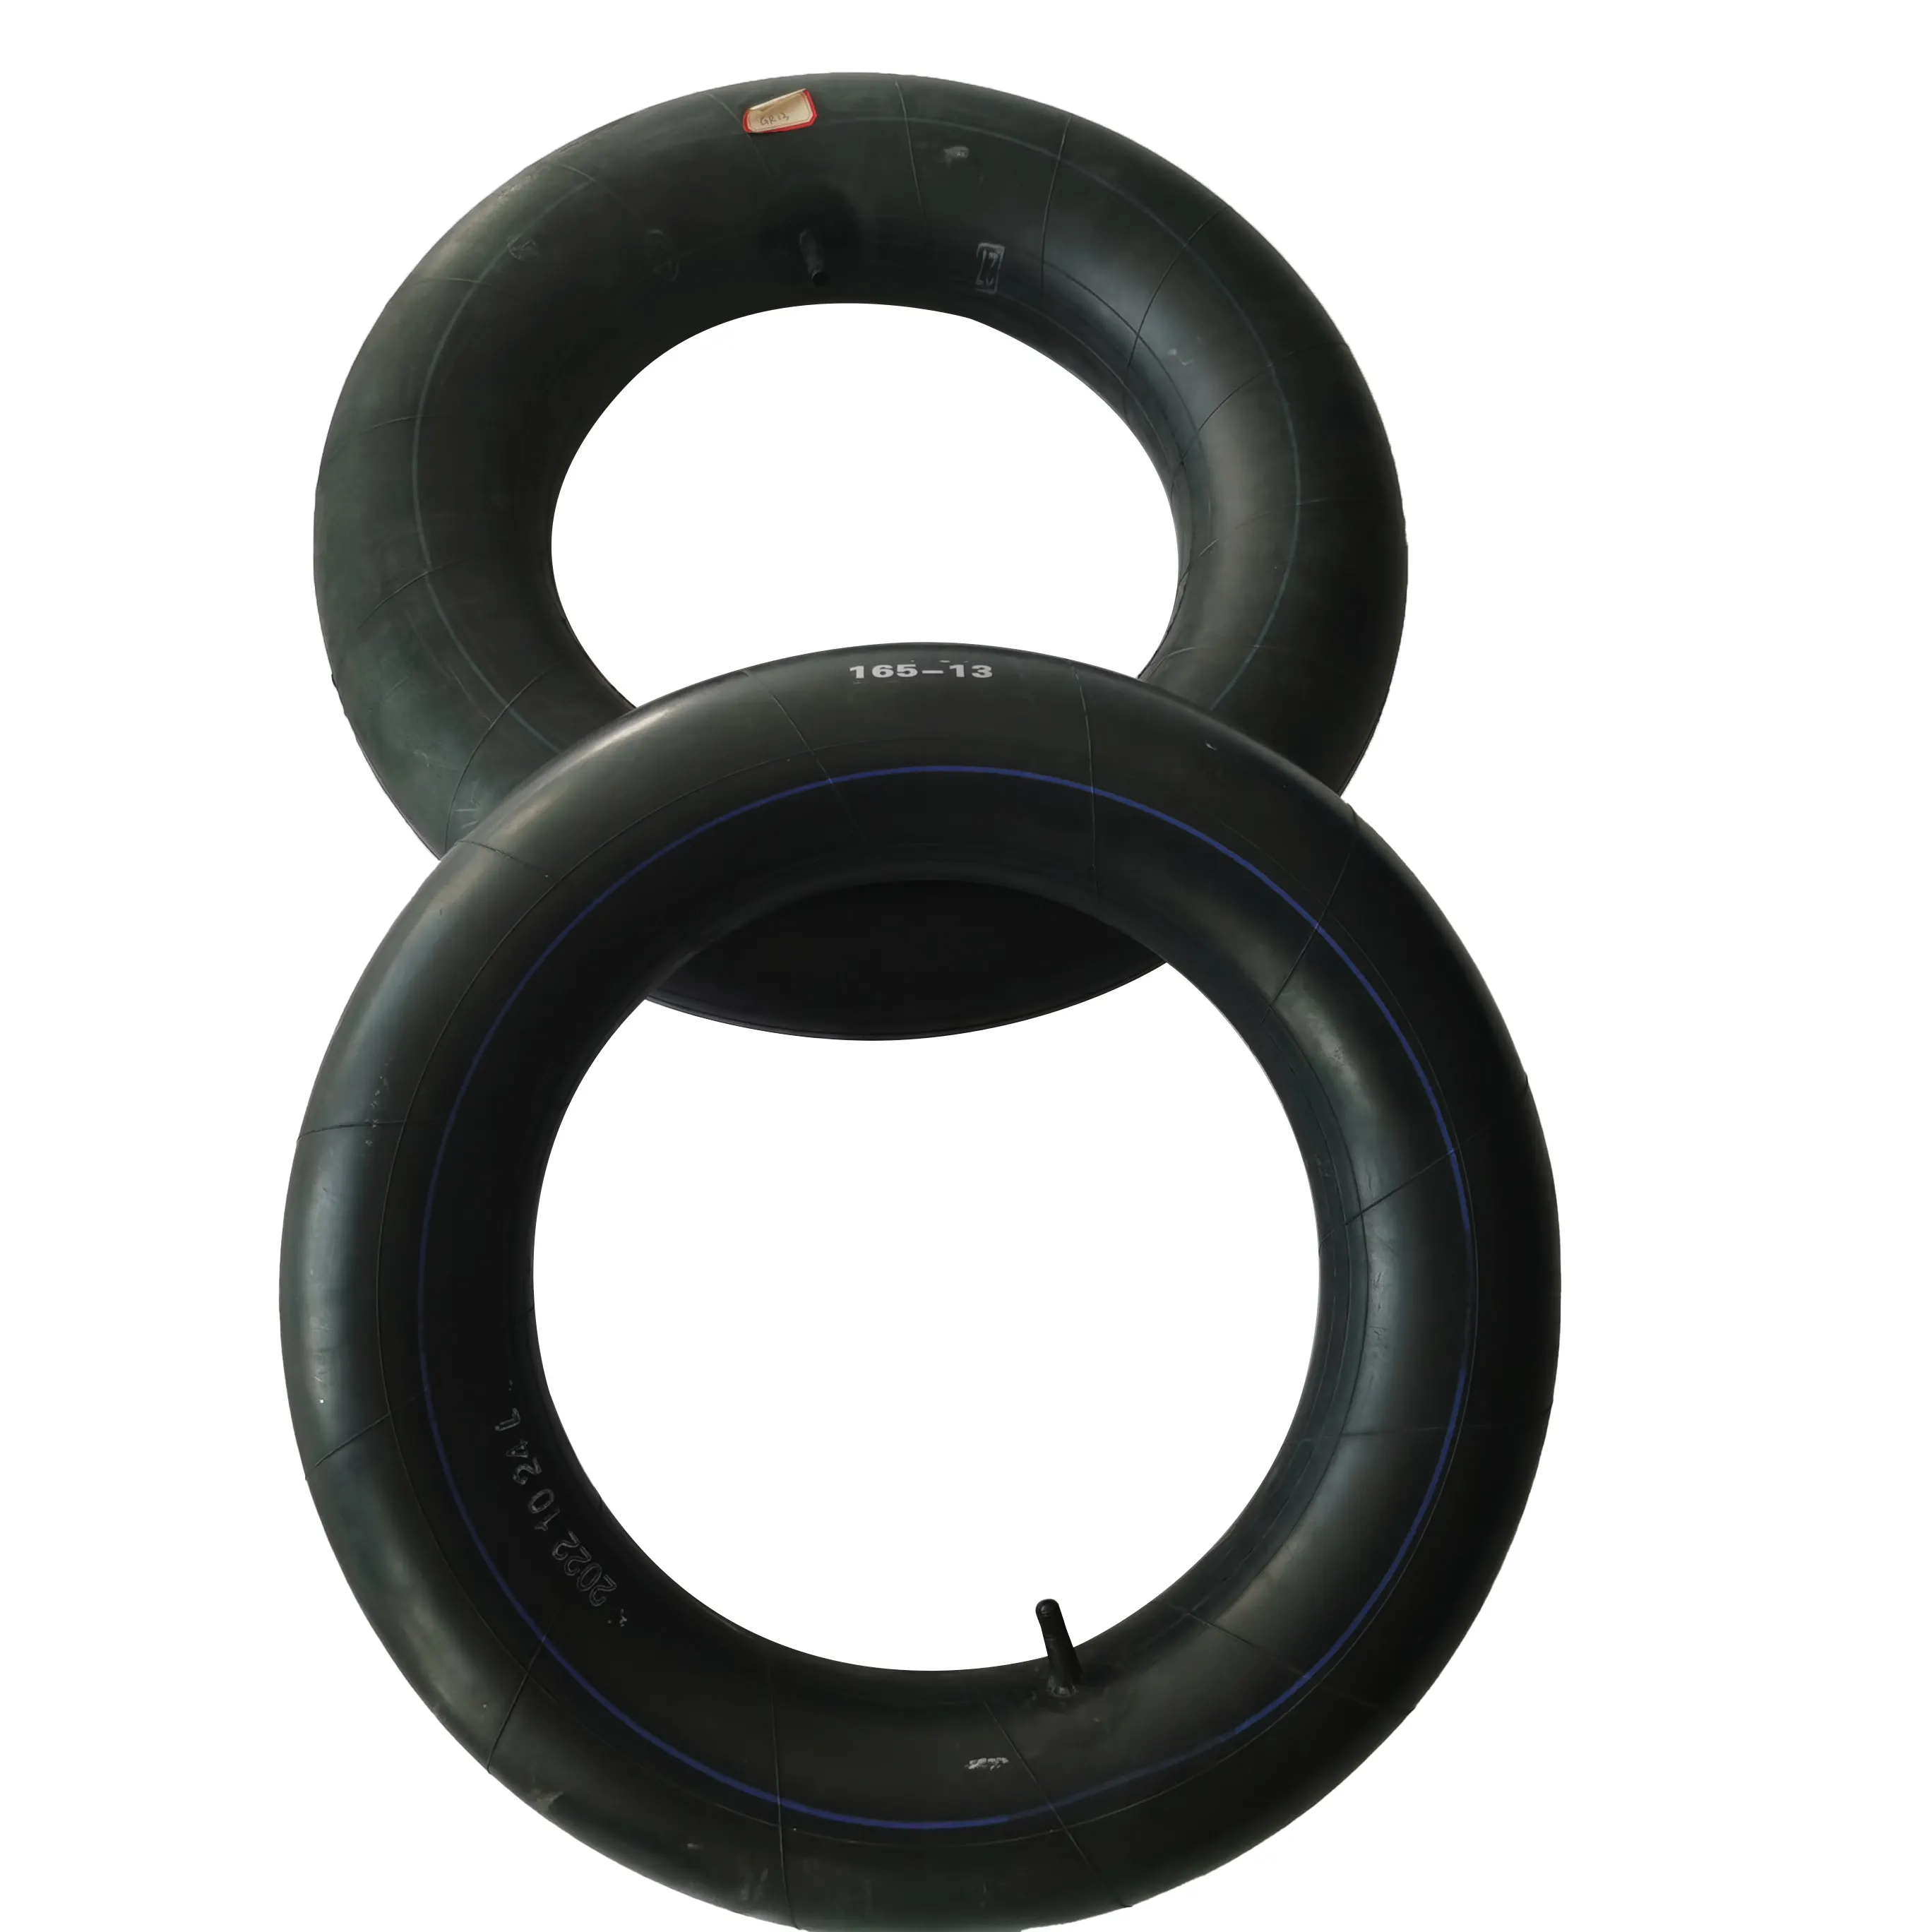 High quality rubber material 185R13 inner tubes for car tires TR13 for passenger vehicles